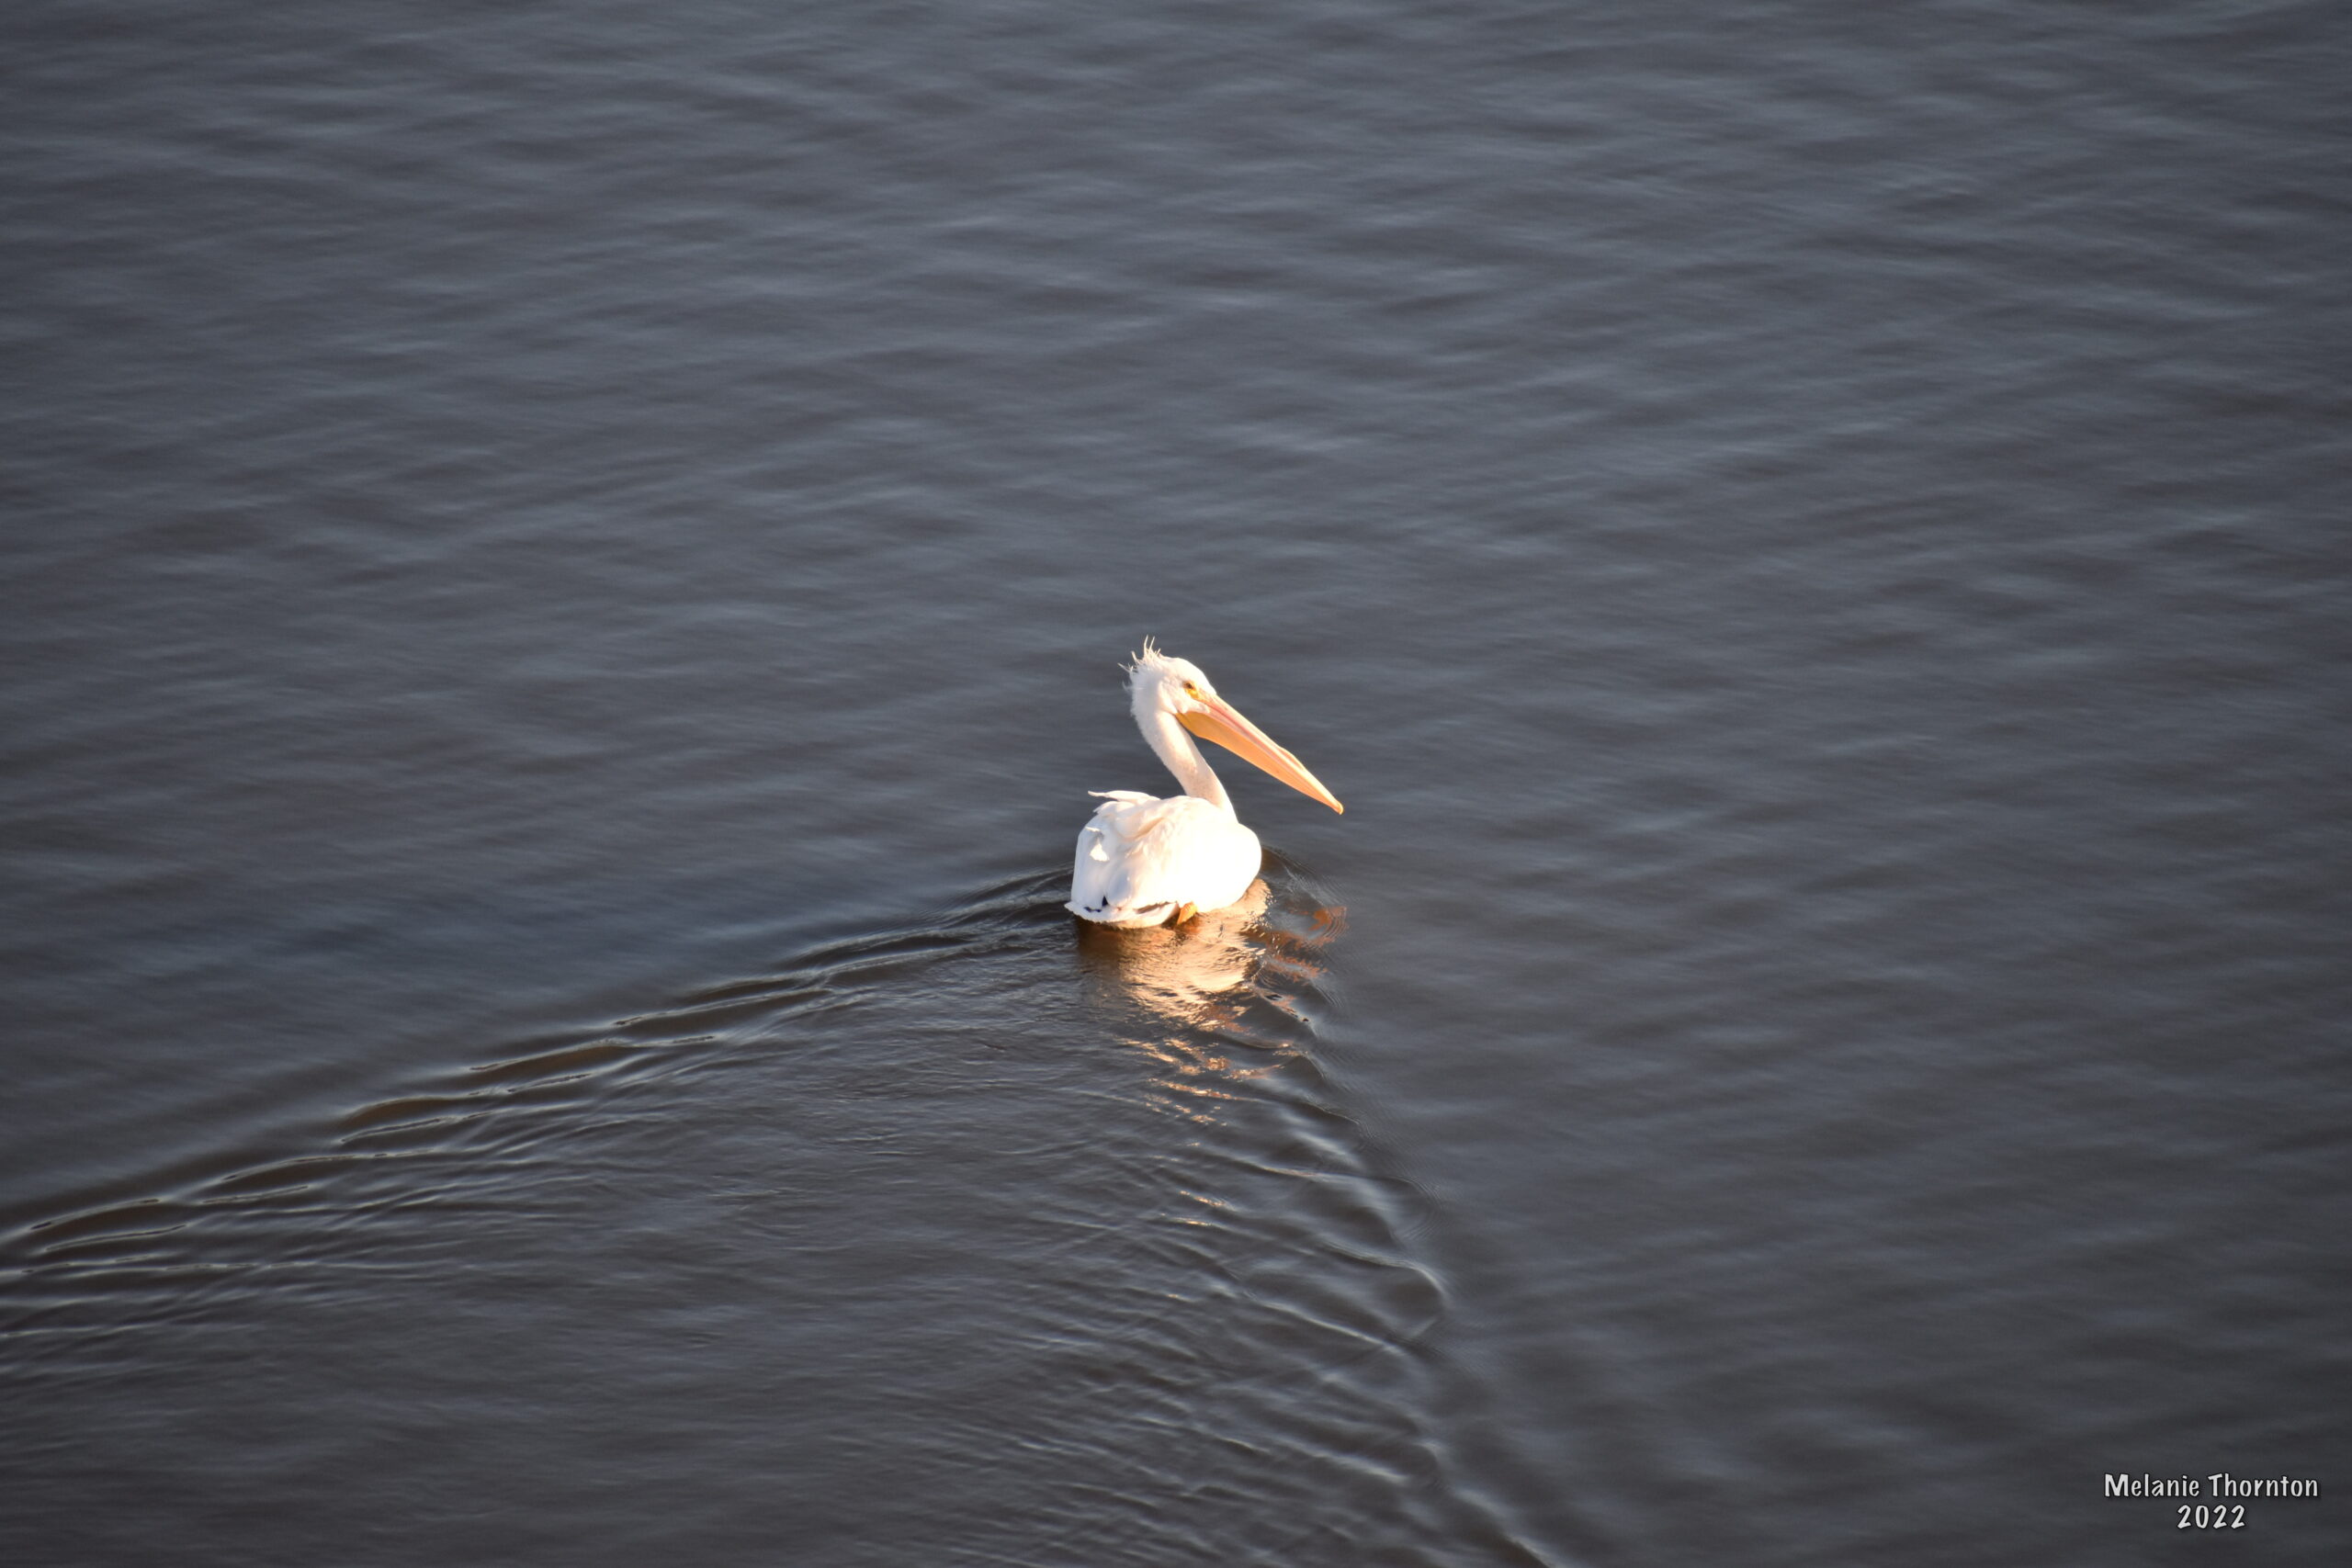 A large white bird with a long orange beak swims away and looks back toward us